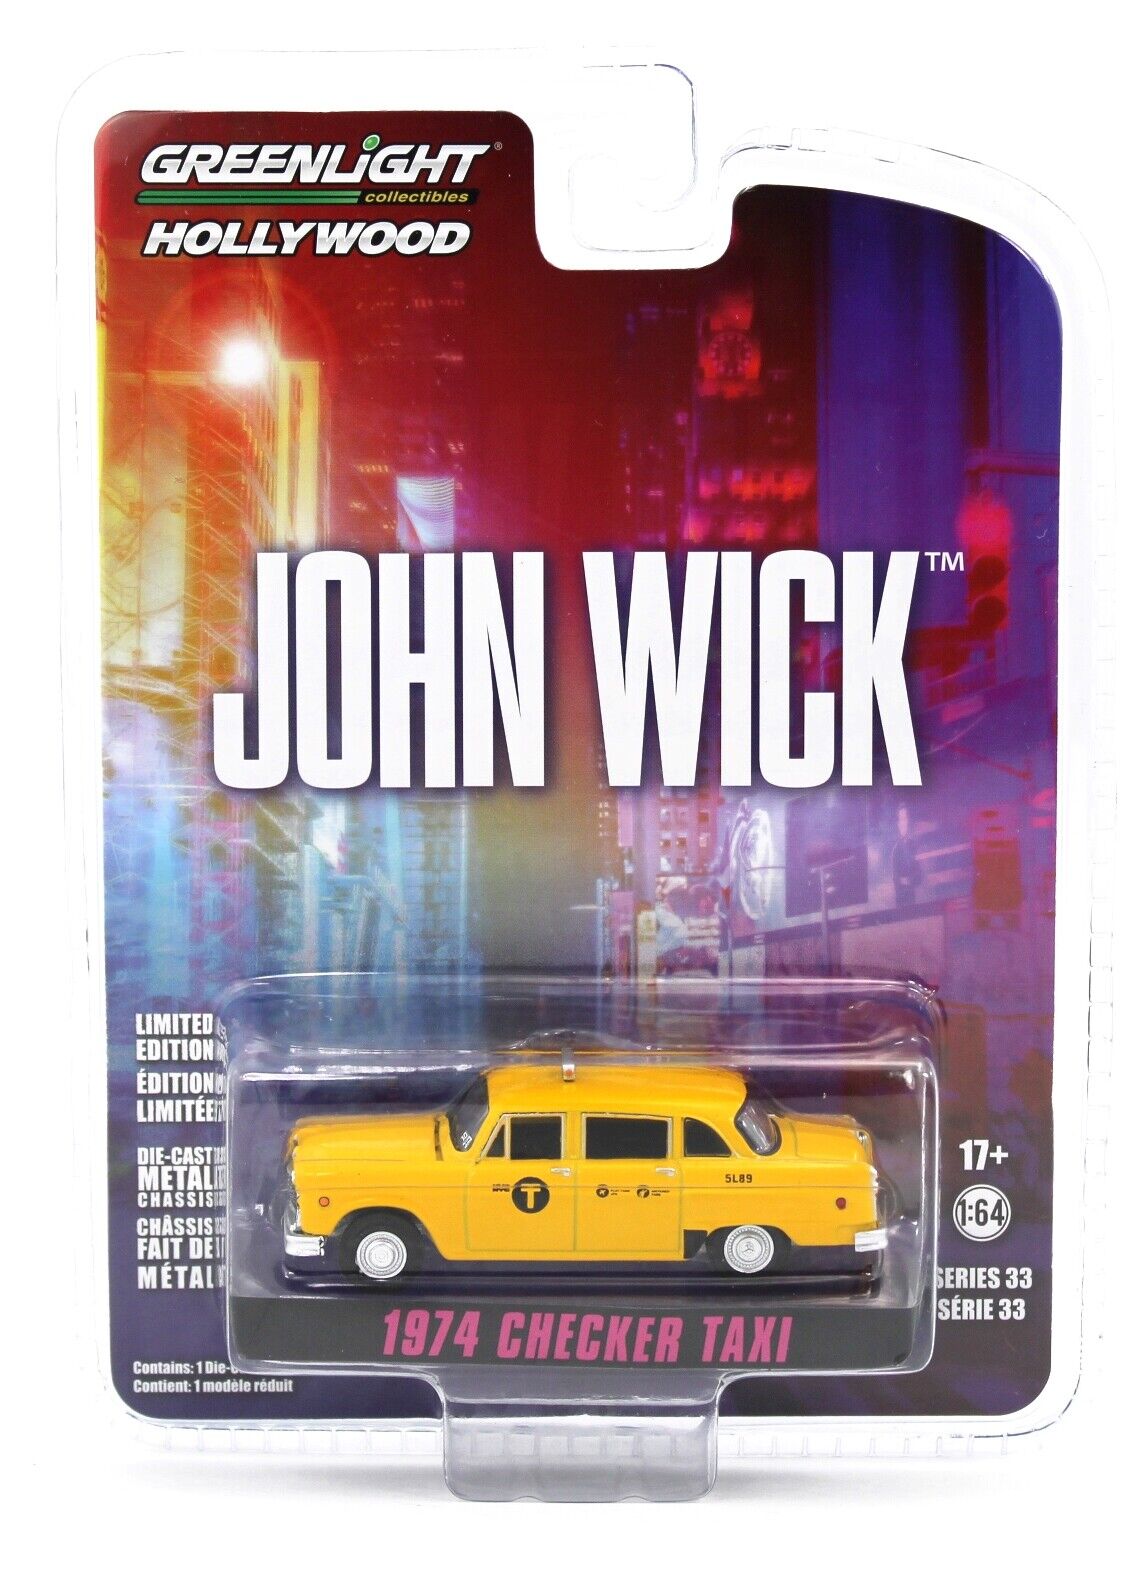 1:64 Greenlight *HOLLYWOOD 33* JOHN WICK 1974 Checker Taxi Cab